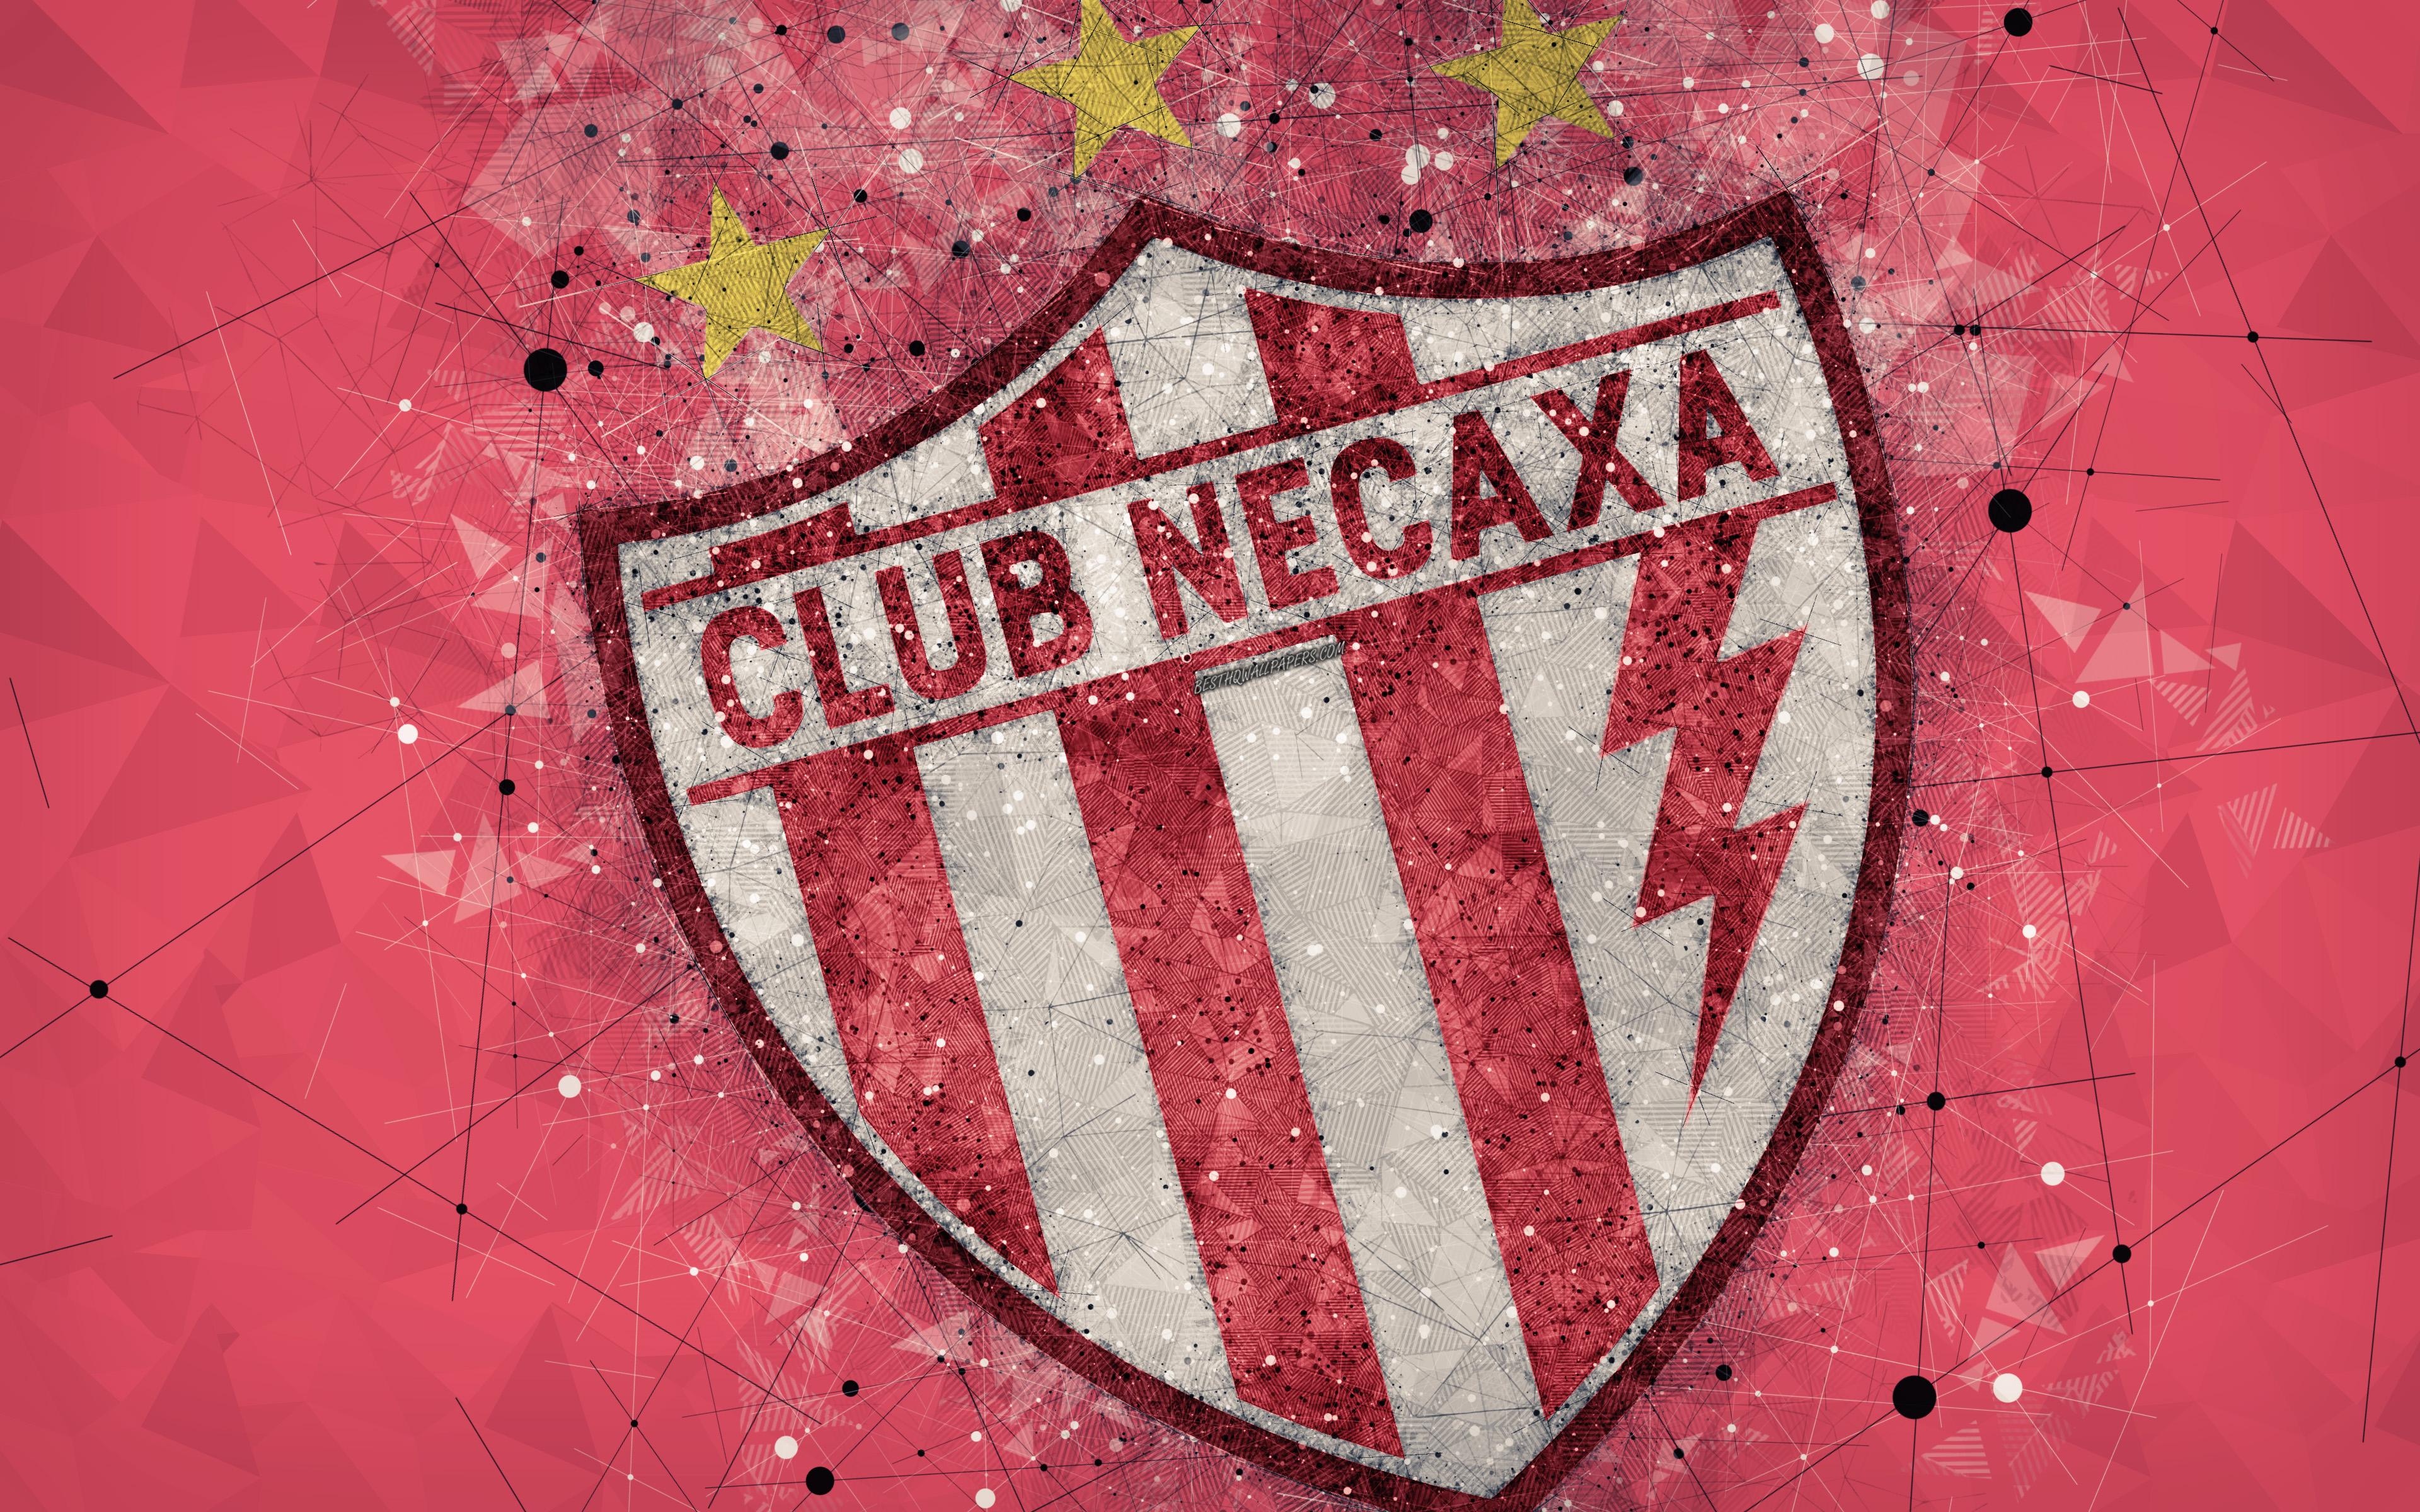 Club Necaxa Wallpapers